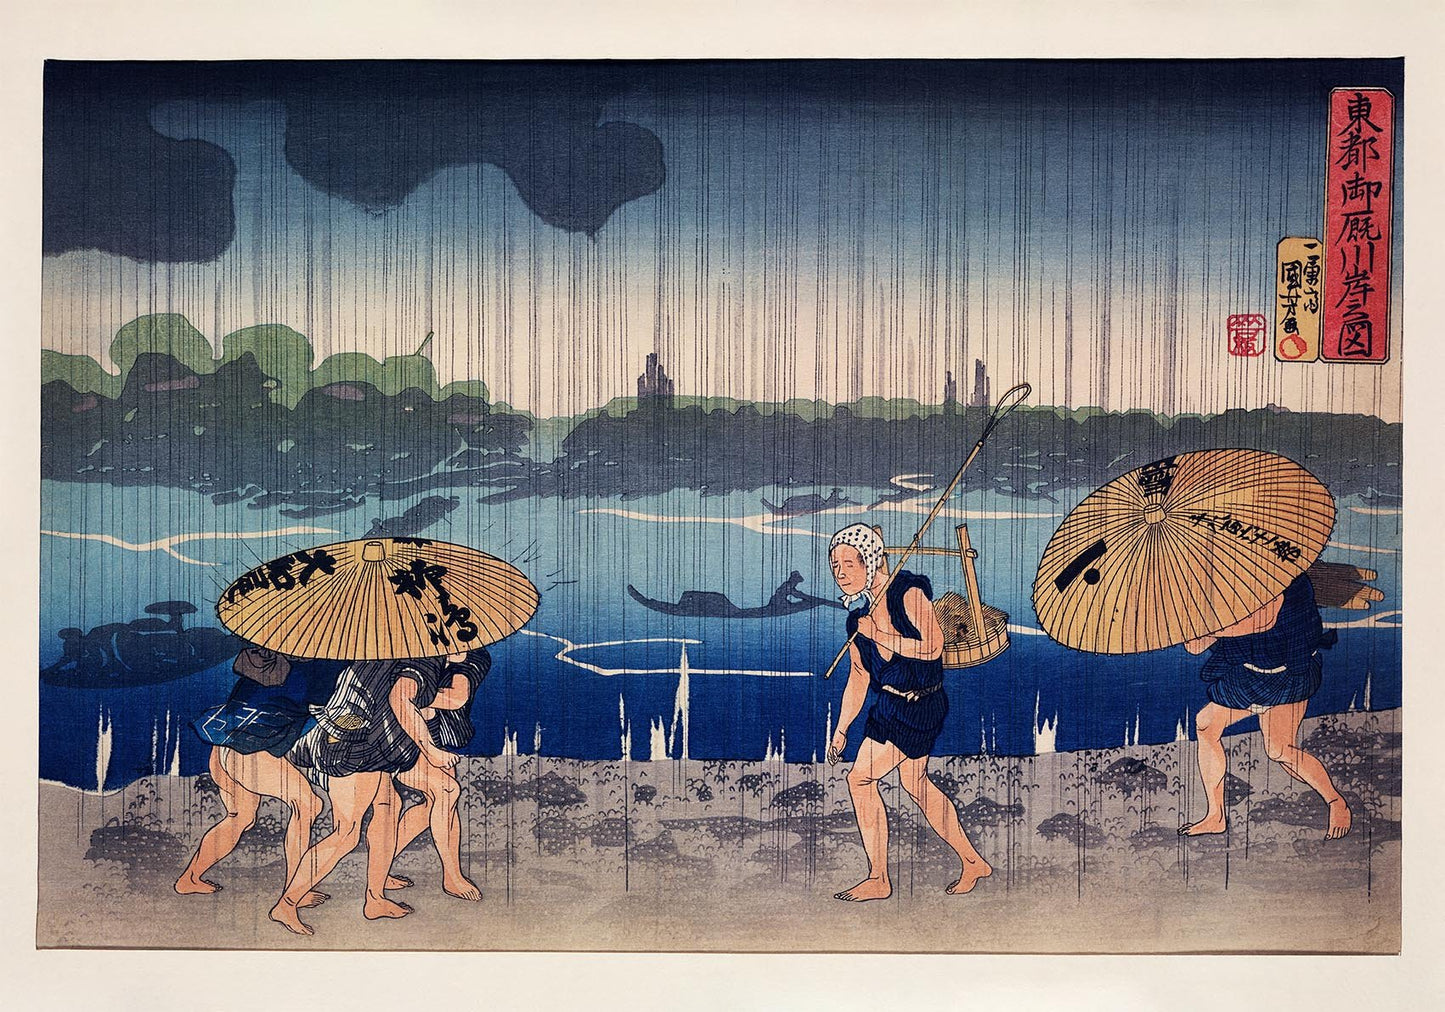 On the Bank of the Sumida River by Utagawa Kuniyoshi